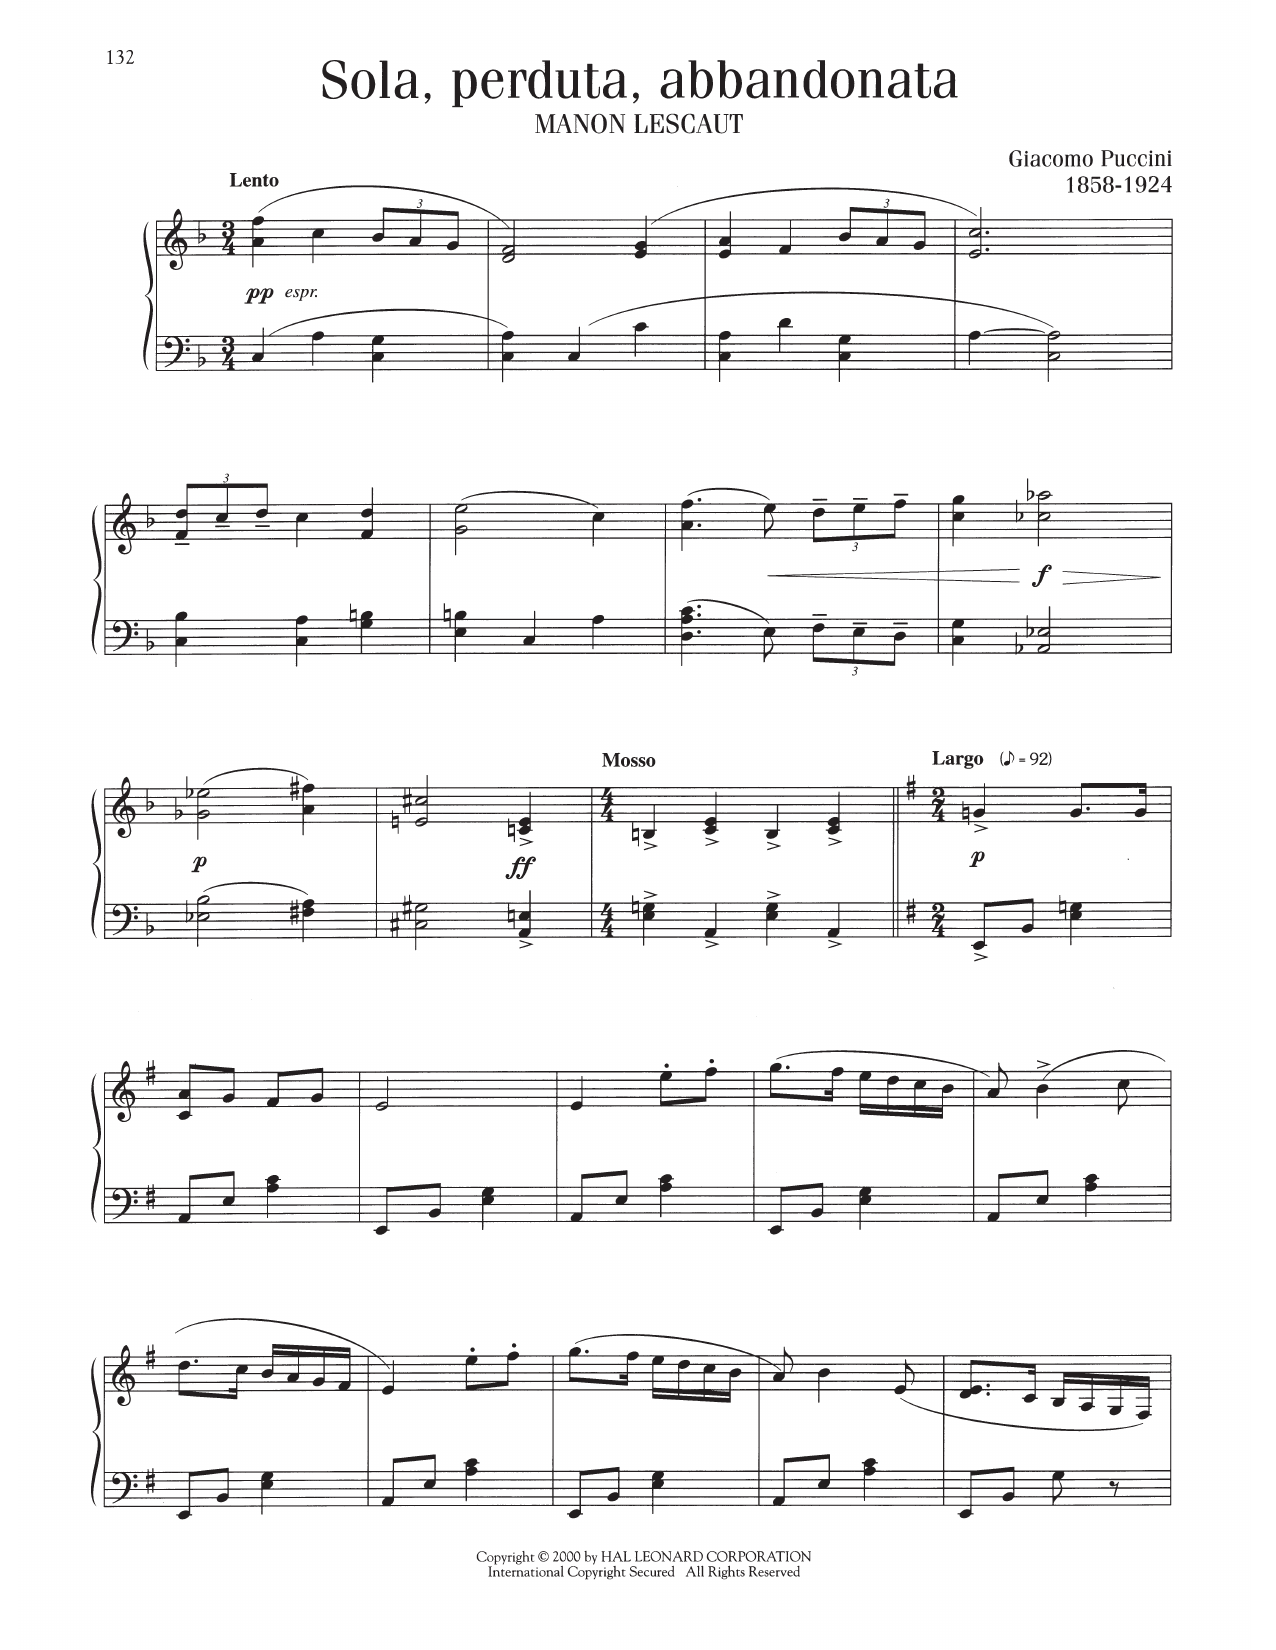 Giacomo Puccini Sola, Perduta, Abbandonata sheet music notes printable PDF score